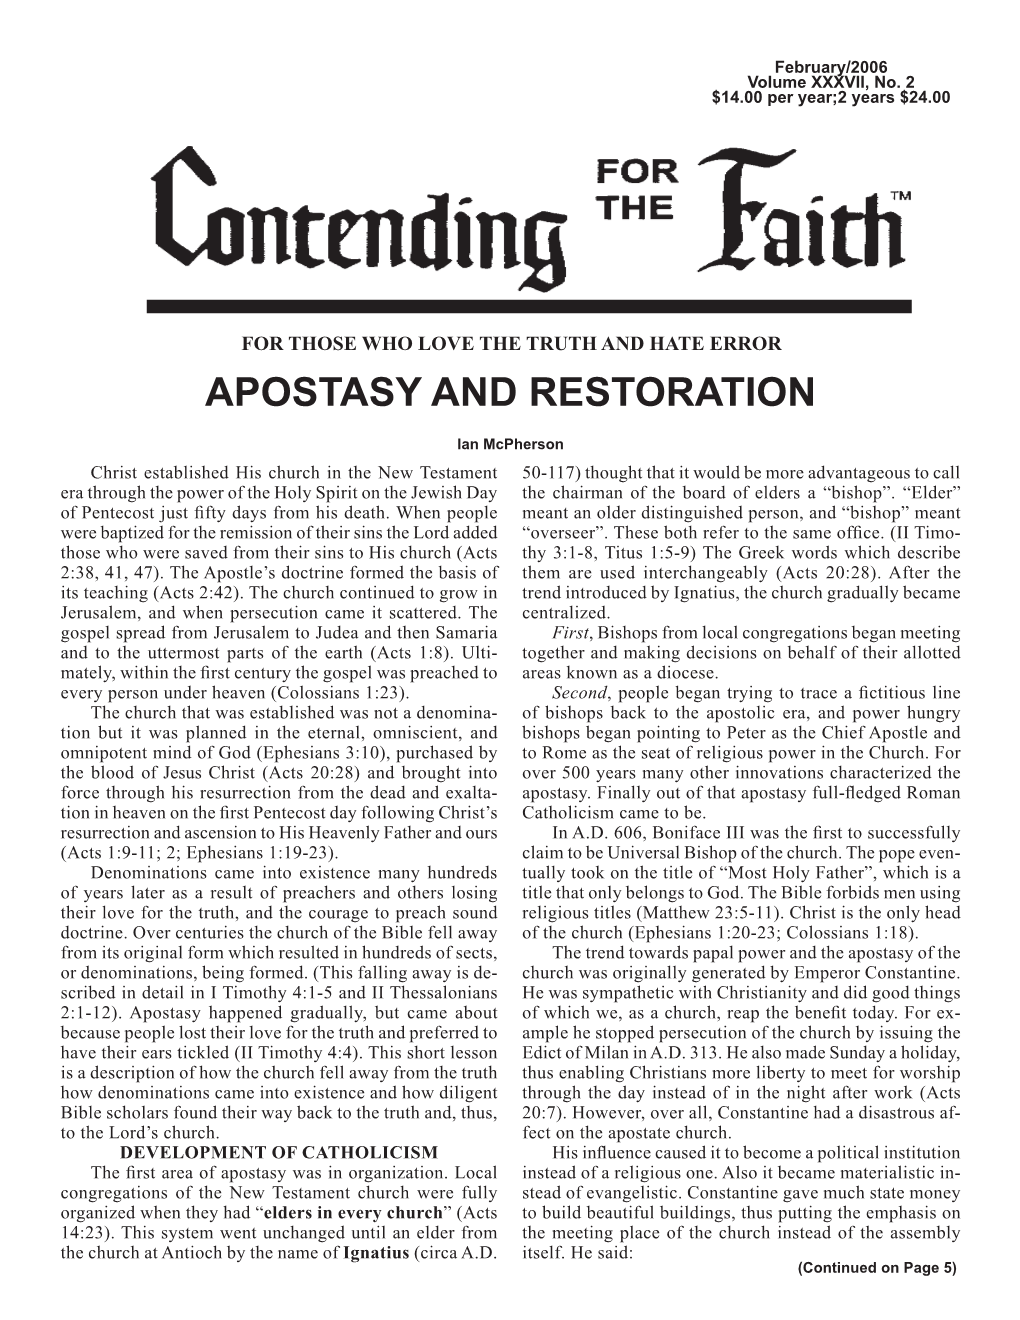 Apostasy and Restoration